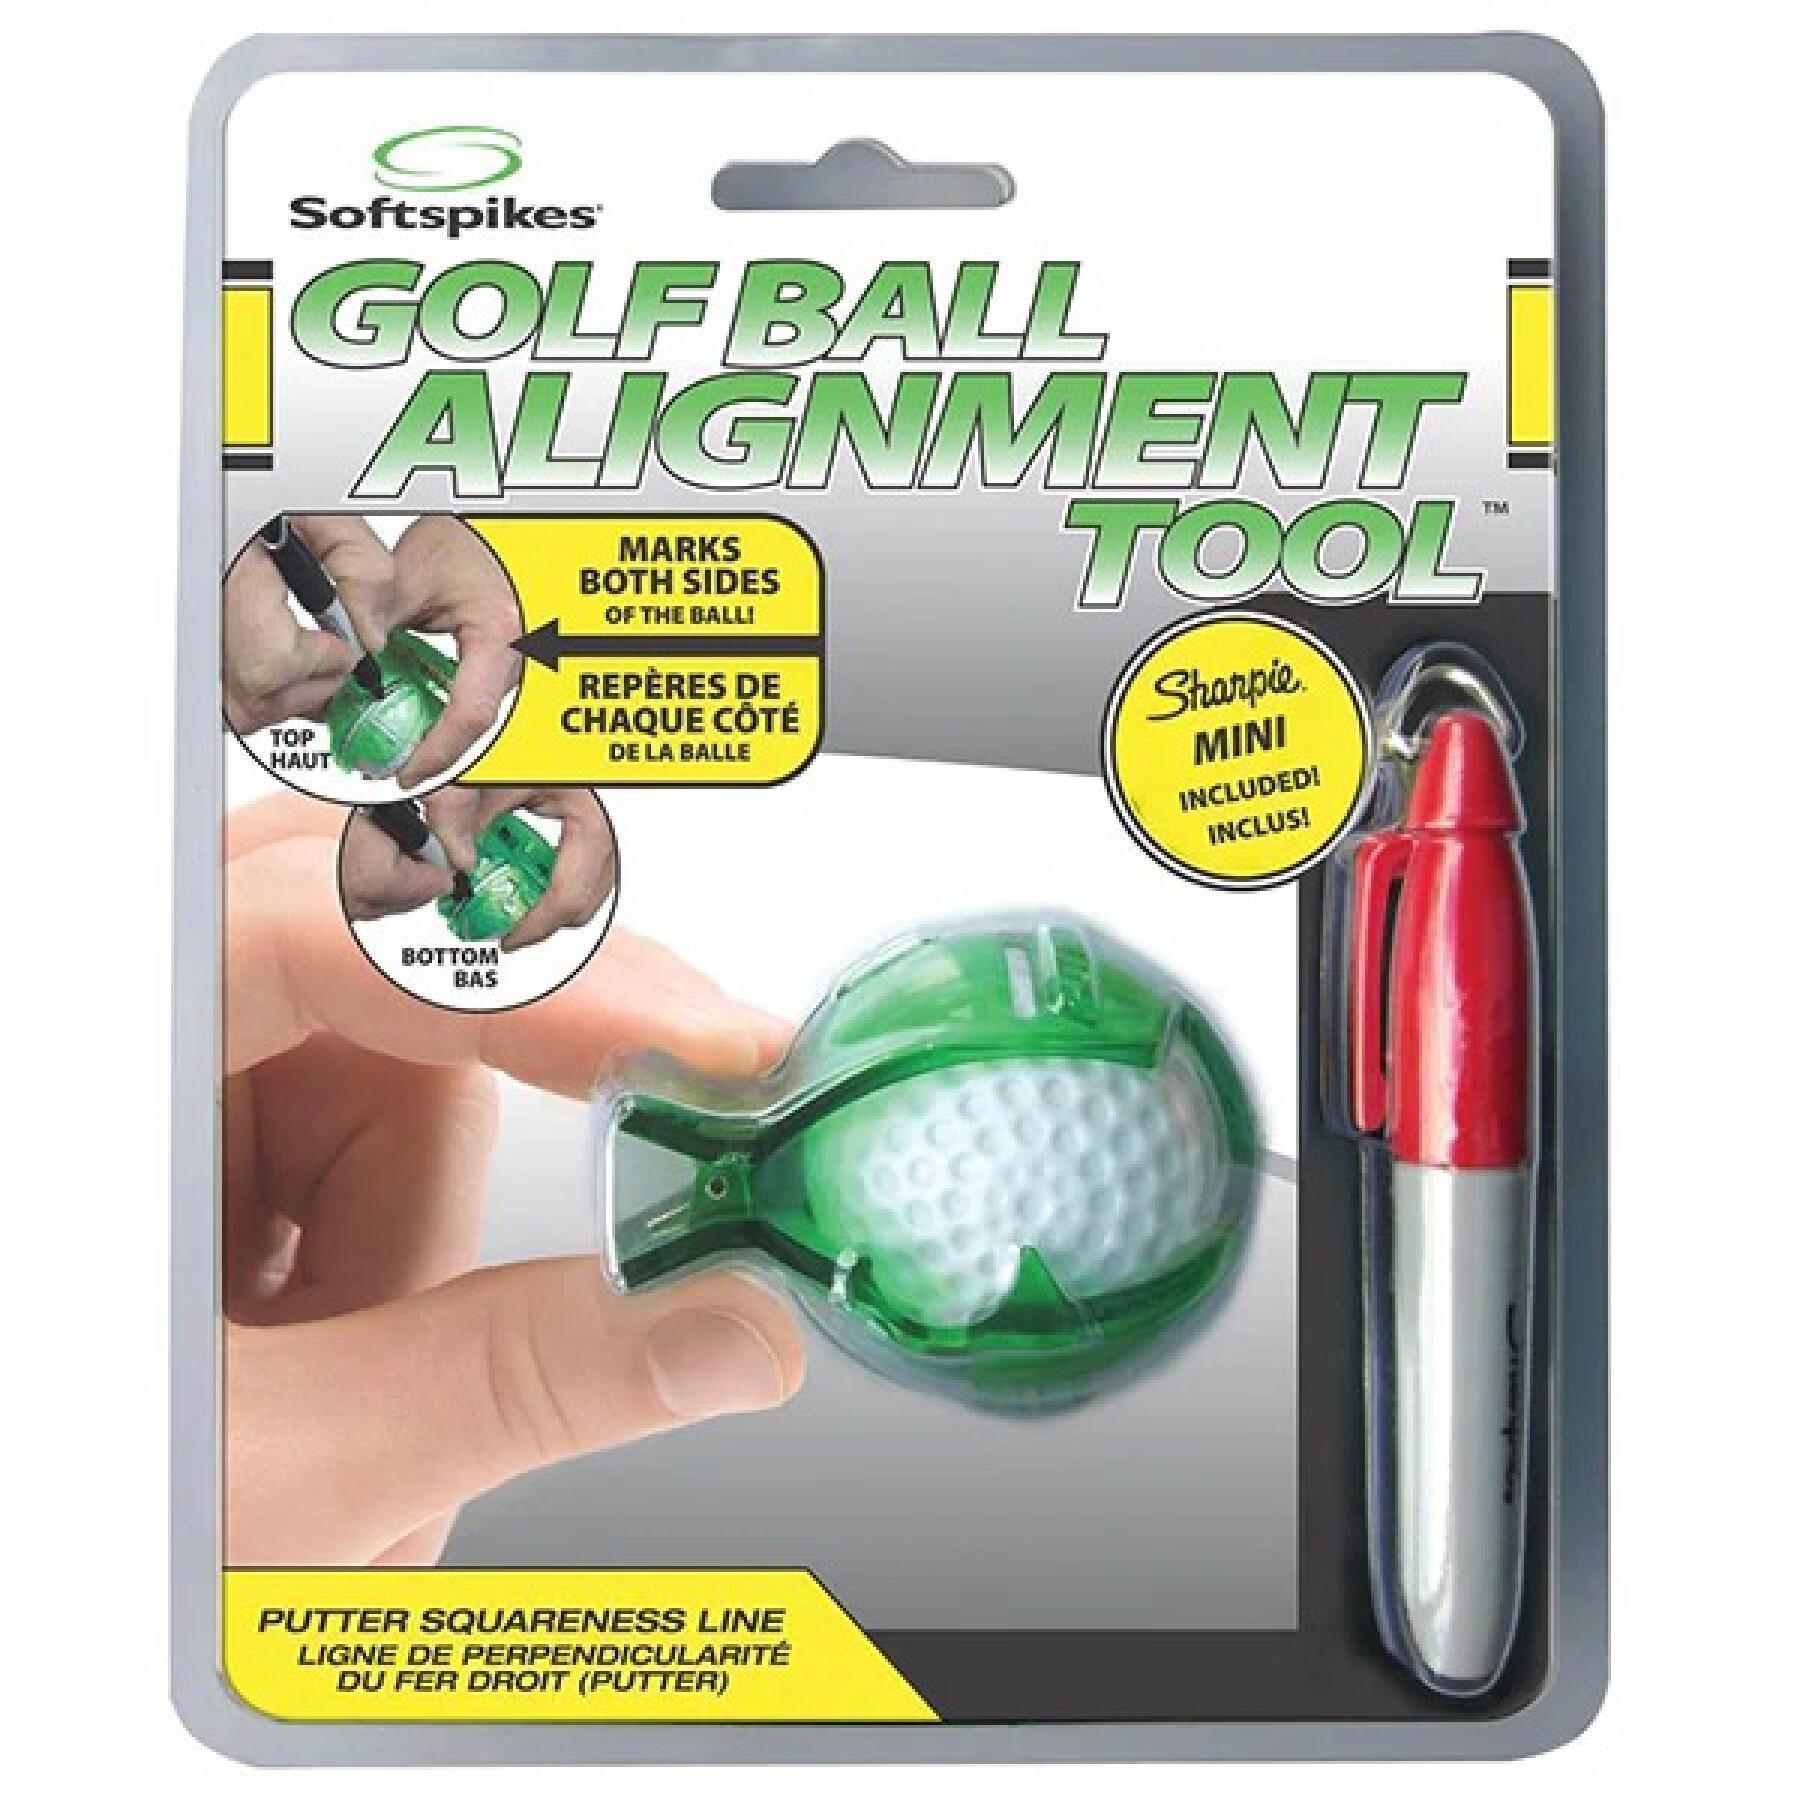 Piłka golfowa Softspikes alignment tool